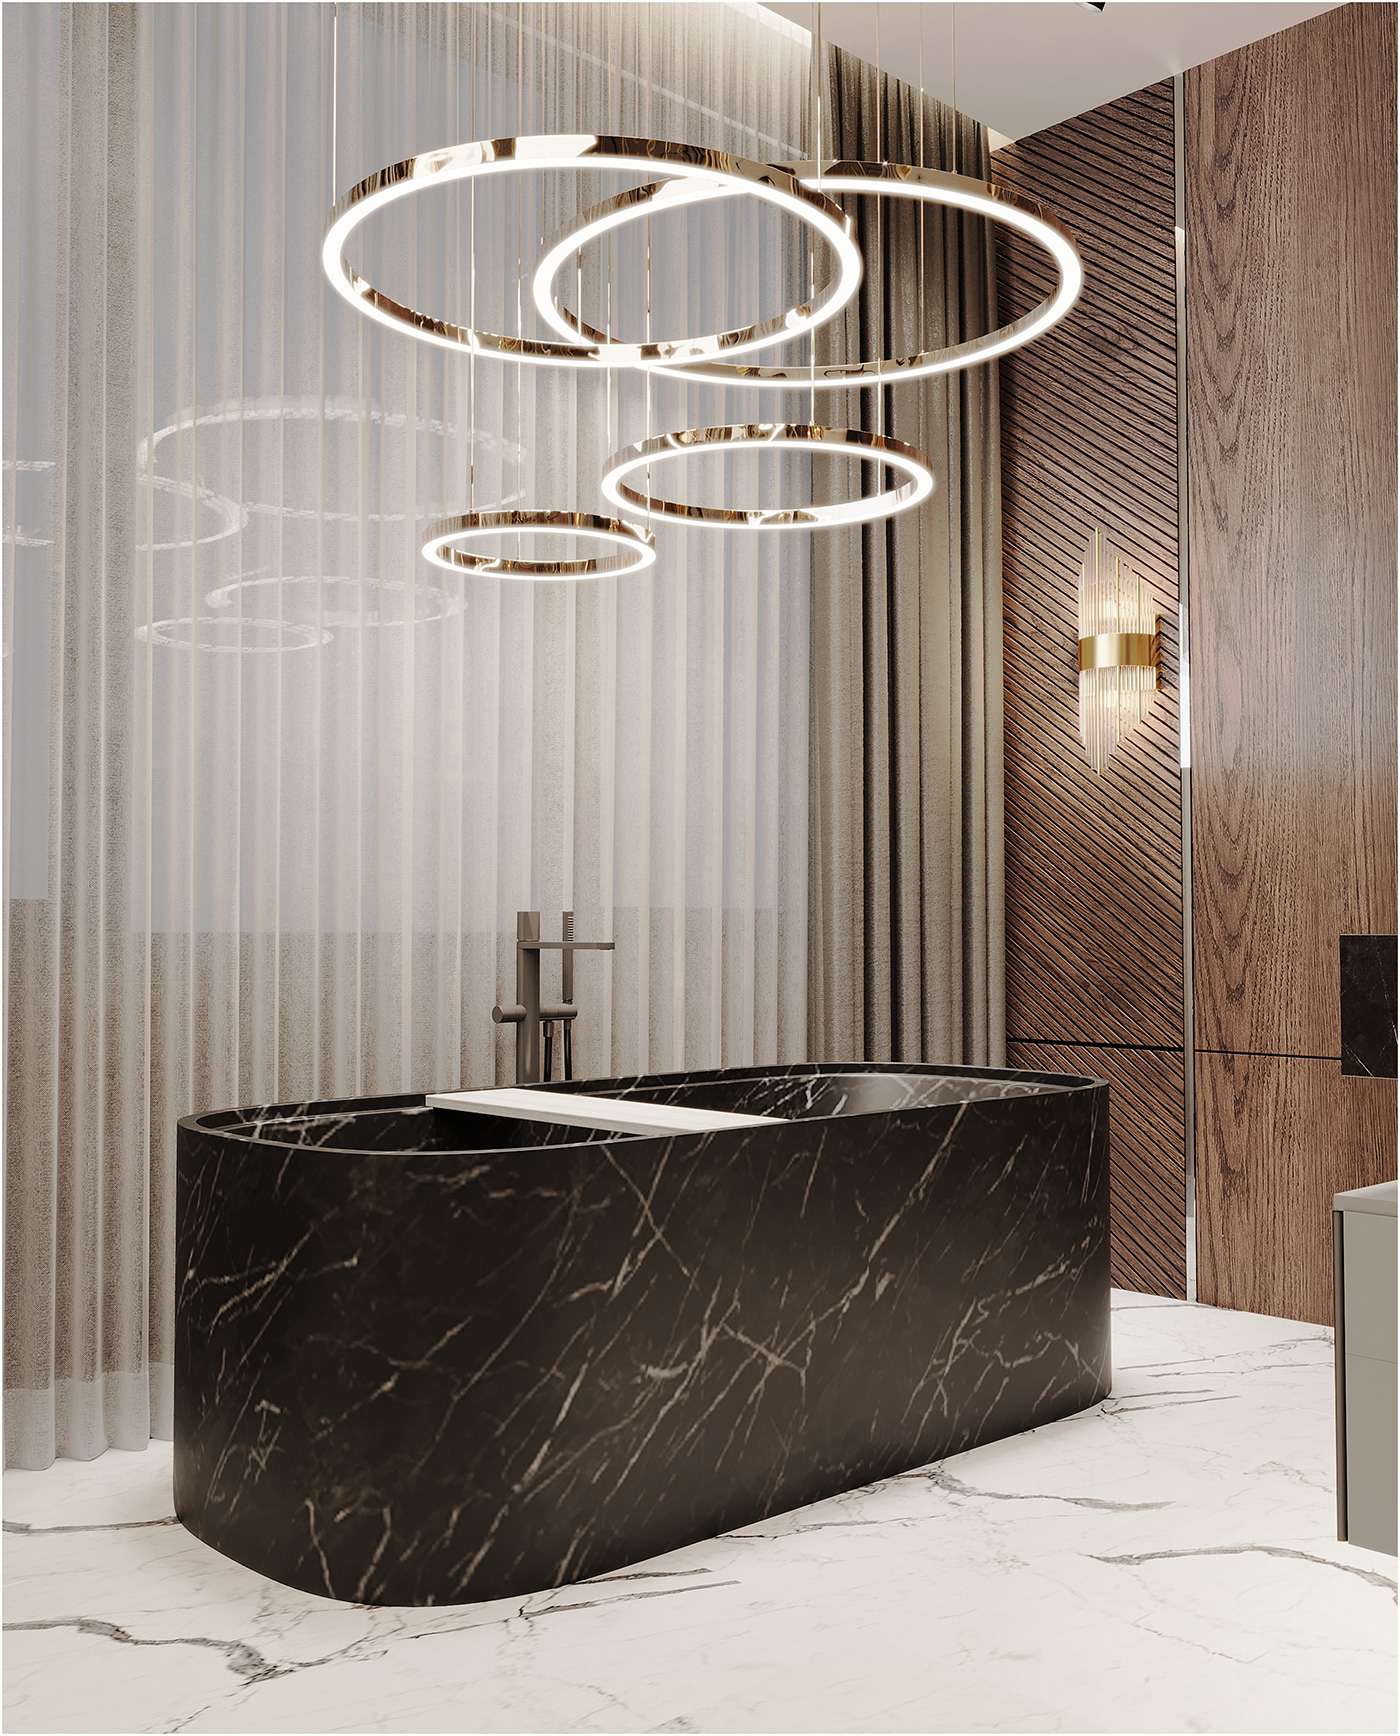 design 3ds max architecture visualization Render interior design  corona archviz 3D master bedroom